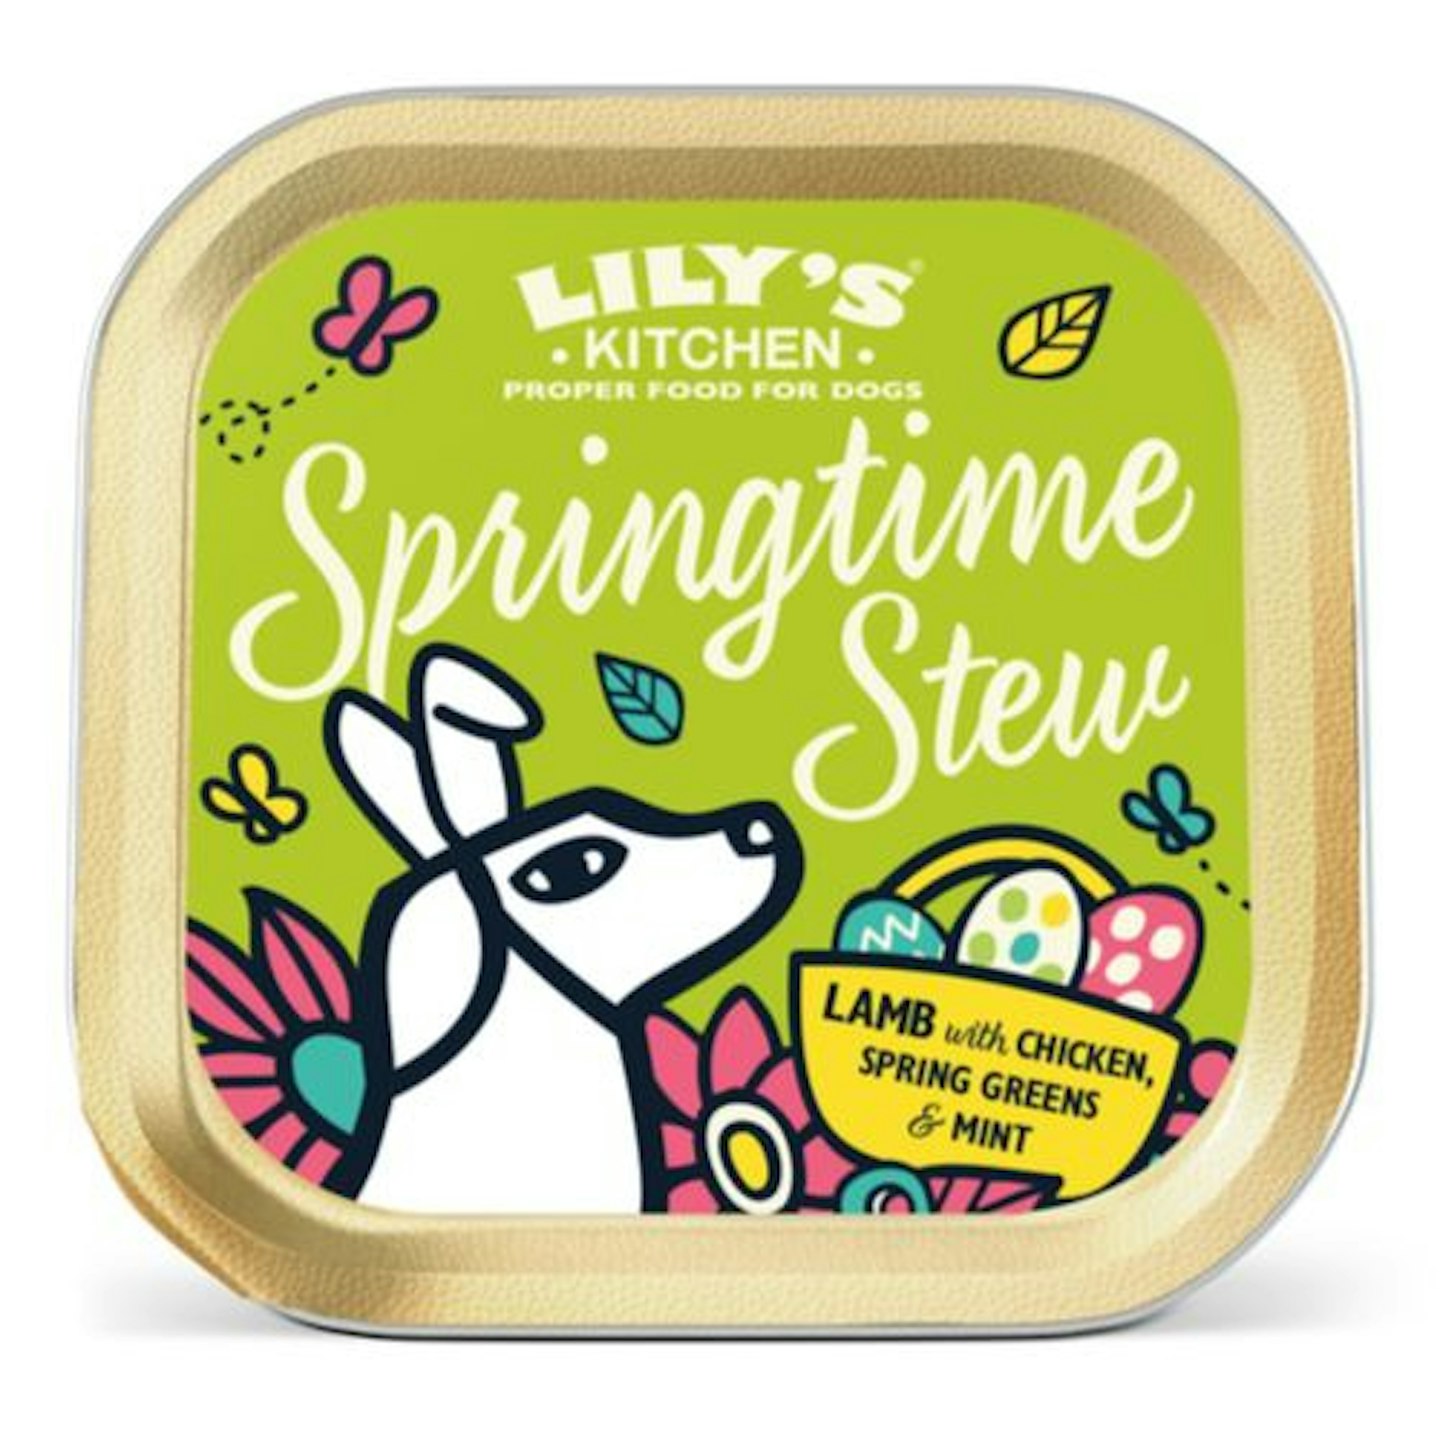 Lily's Kitchen Springtime Stew